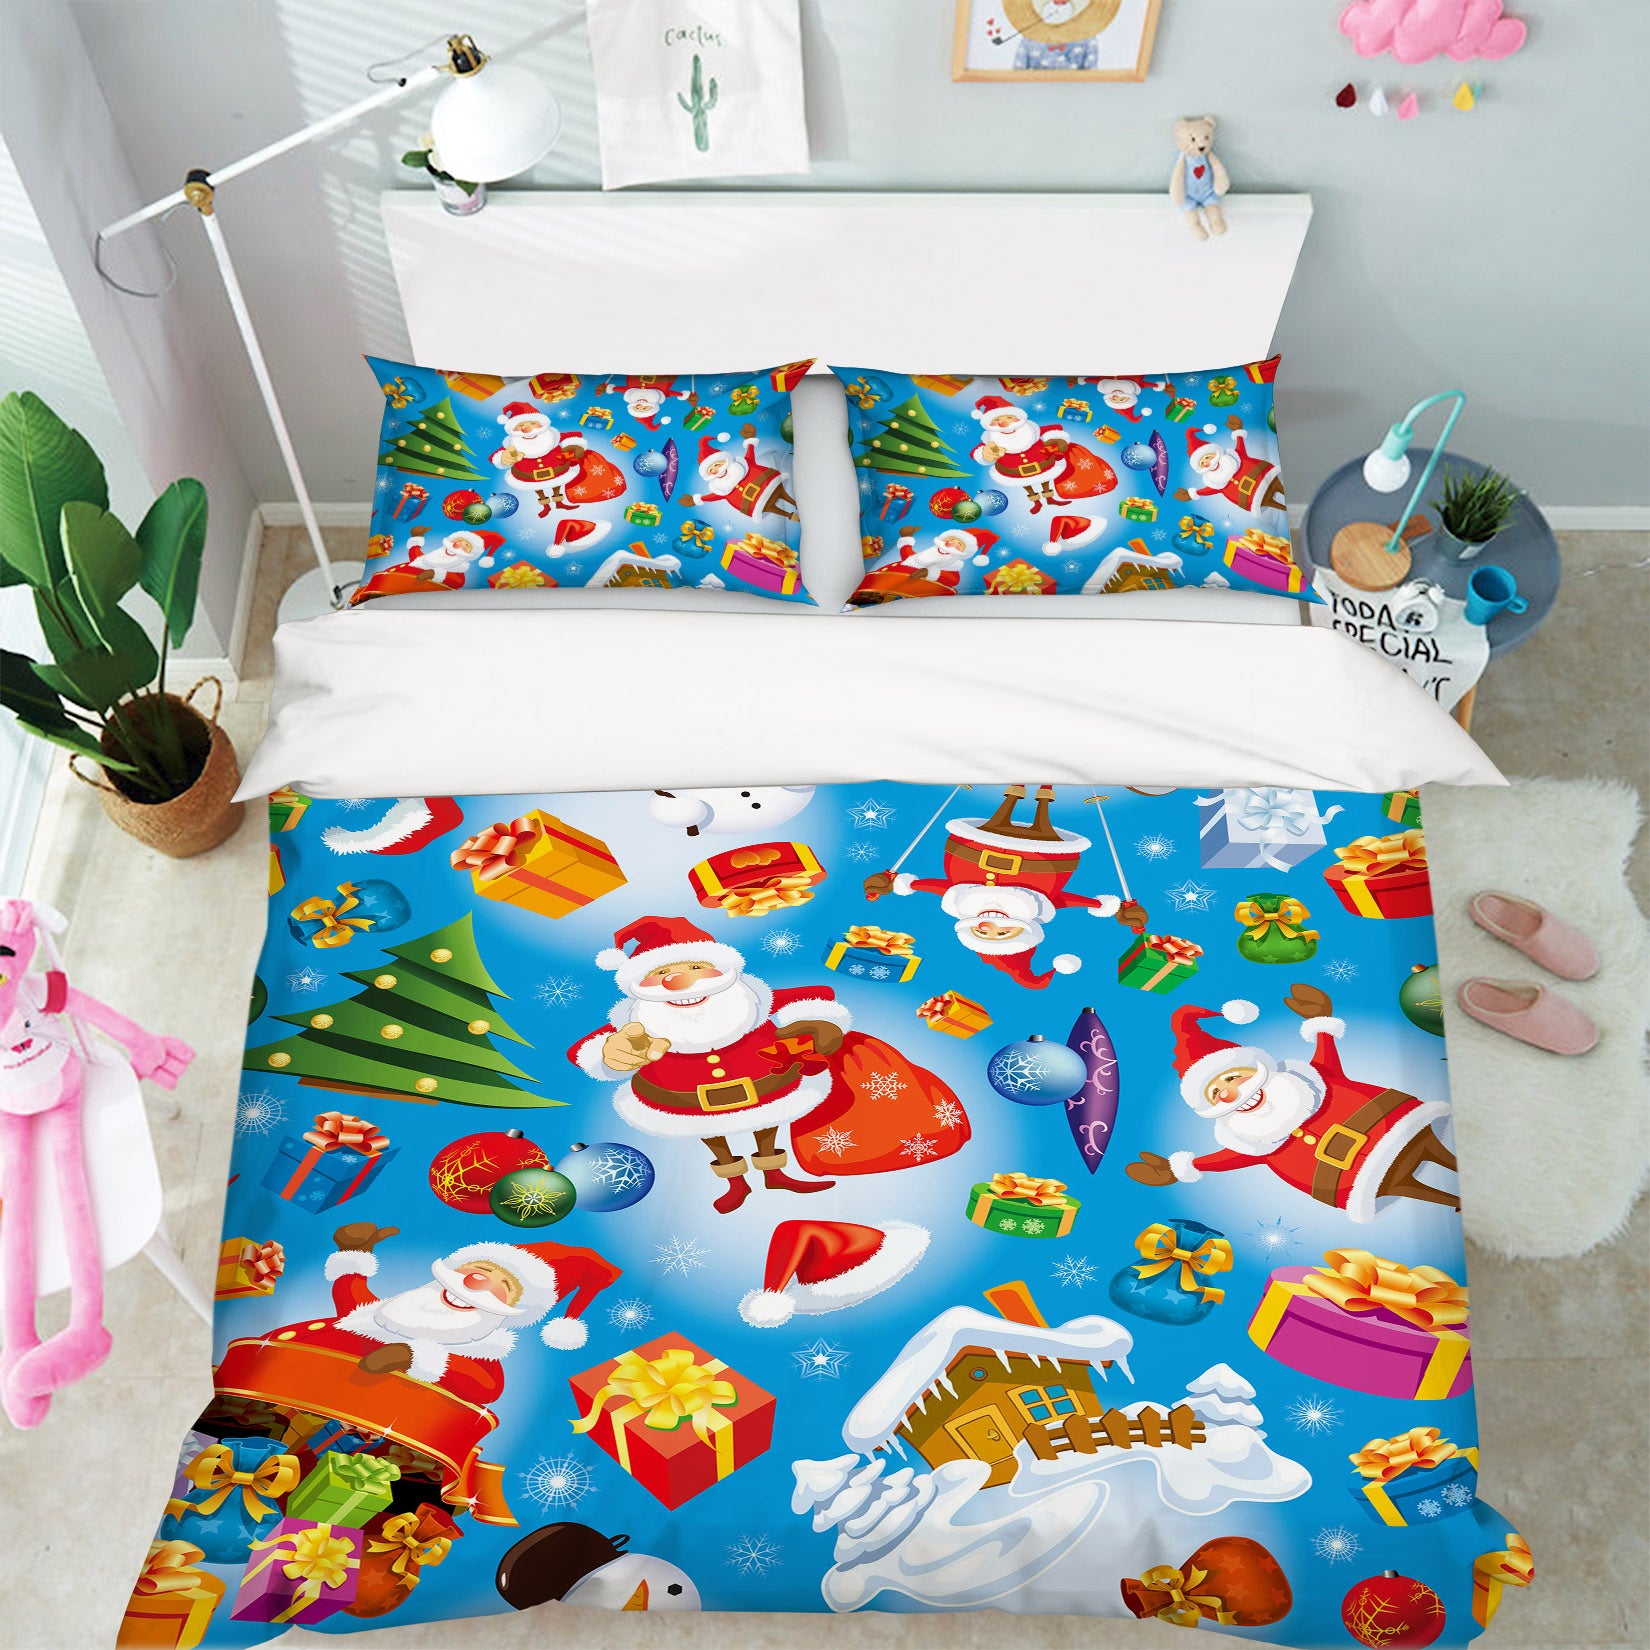 3D Santa Claus Pattern 52236 Christmas Quilt Duvet Cover Xmas Bed Pillowcases